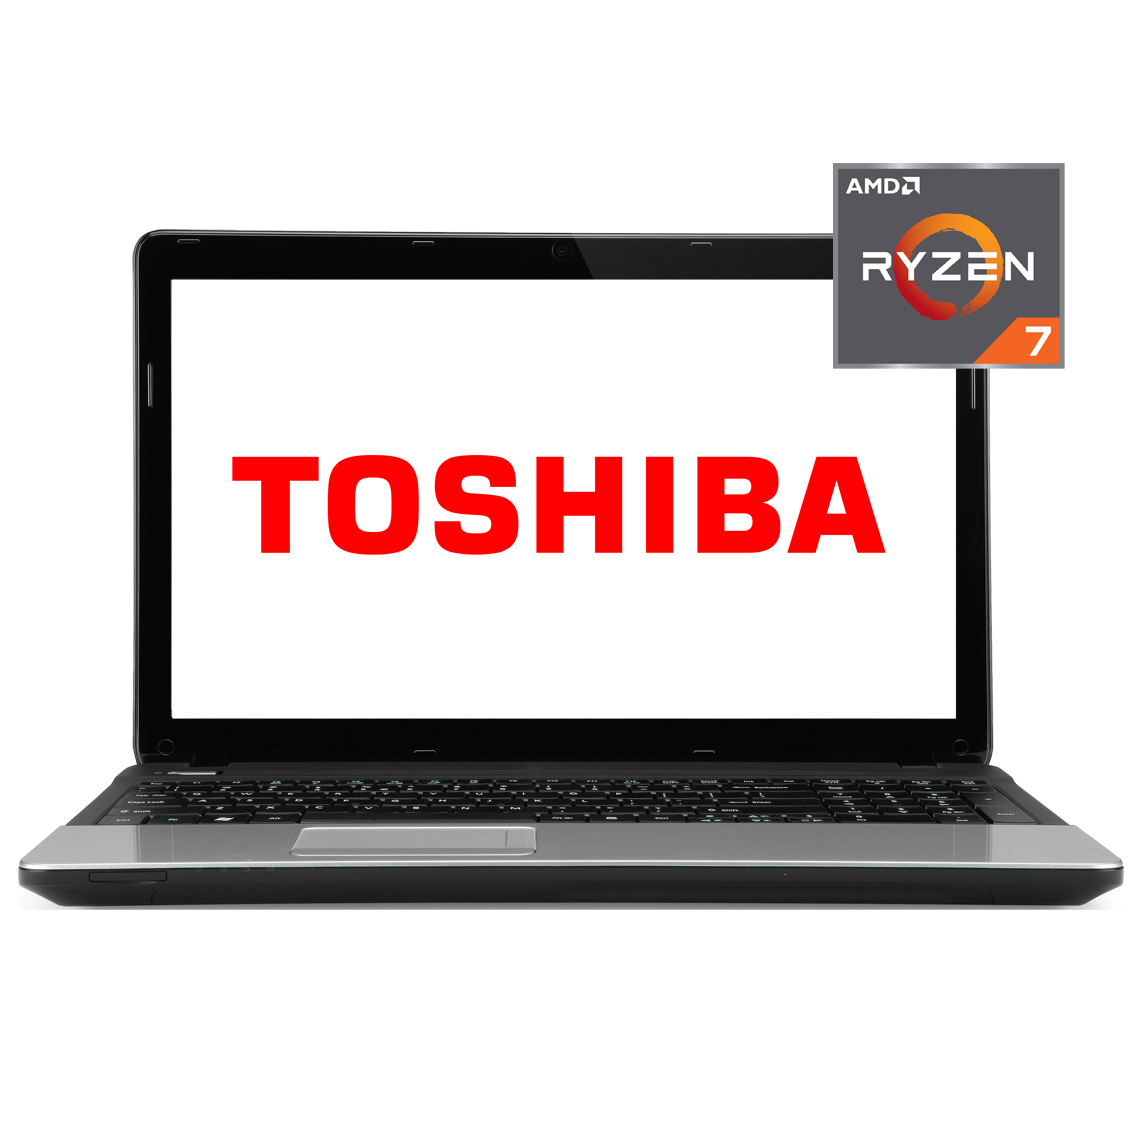 Toshiba - 13 inch AMD Ryzen 7